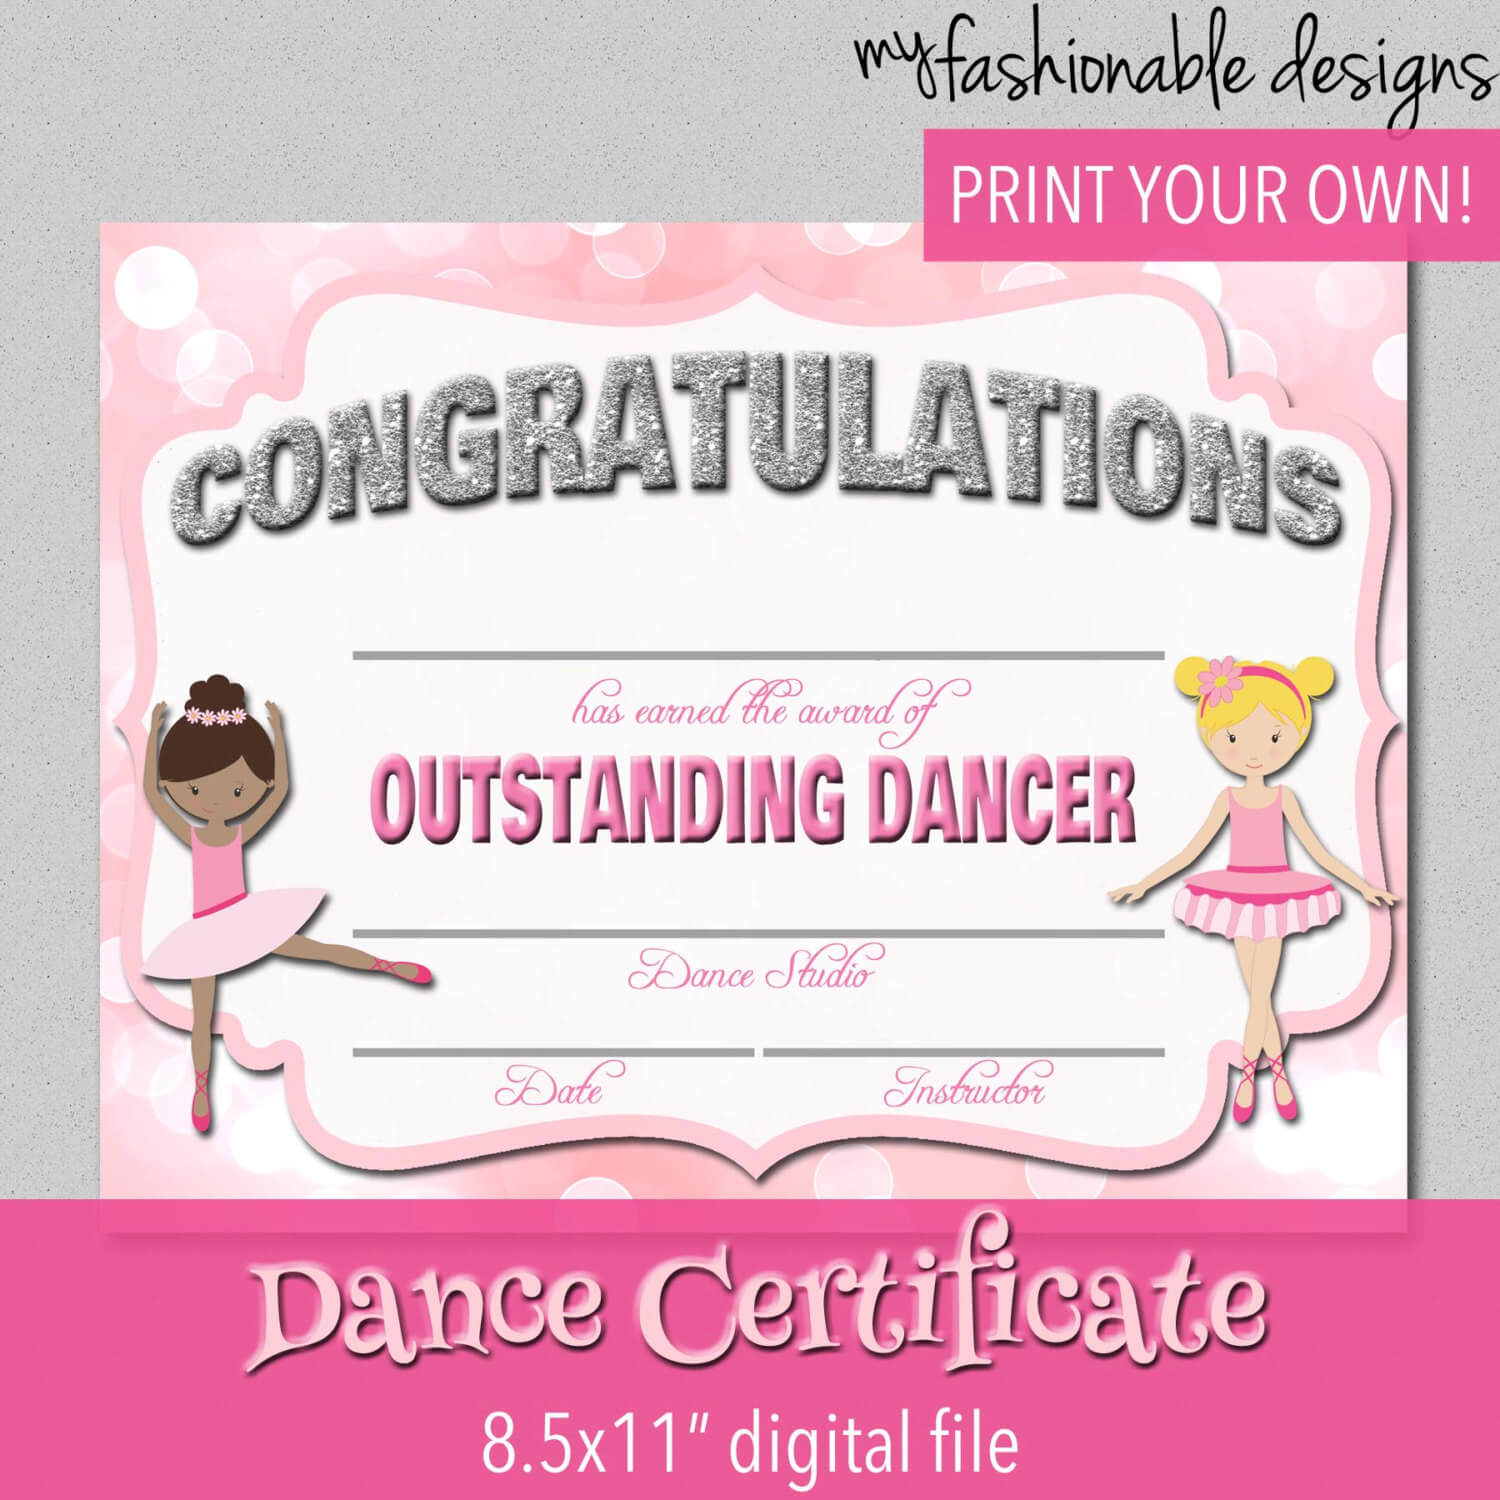 Certificate Templates: Free Dance Certificate Template Throughout Dance Certificate Template